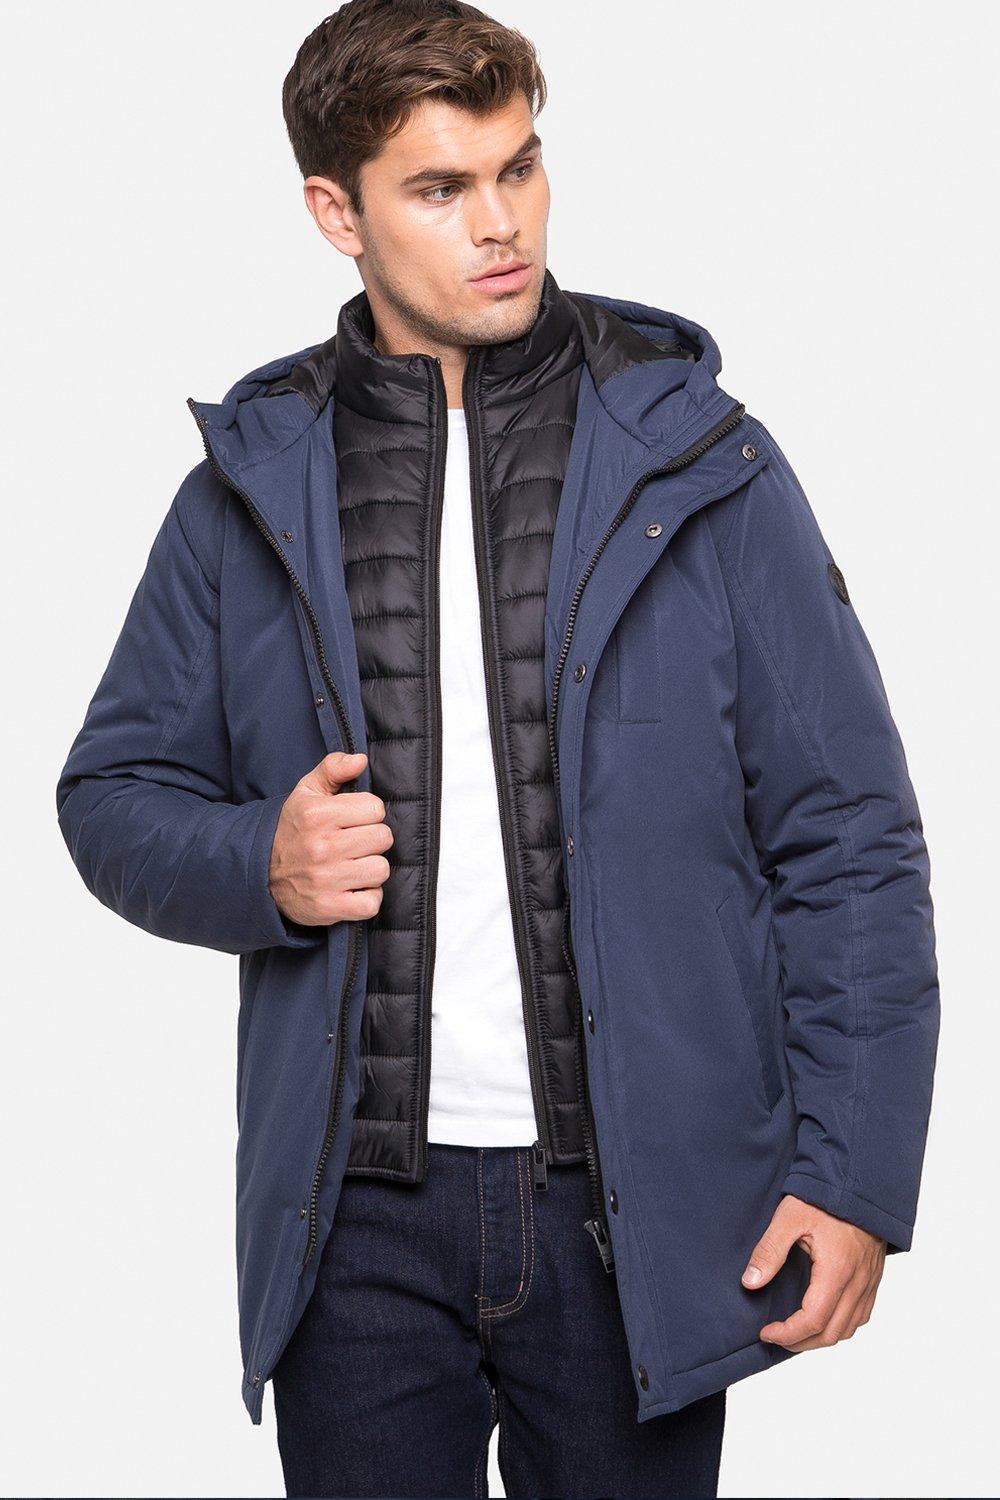 Jackets & Coats | 'Galbraith' Showerproof Mock Layer Raincoat | Threadbare